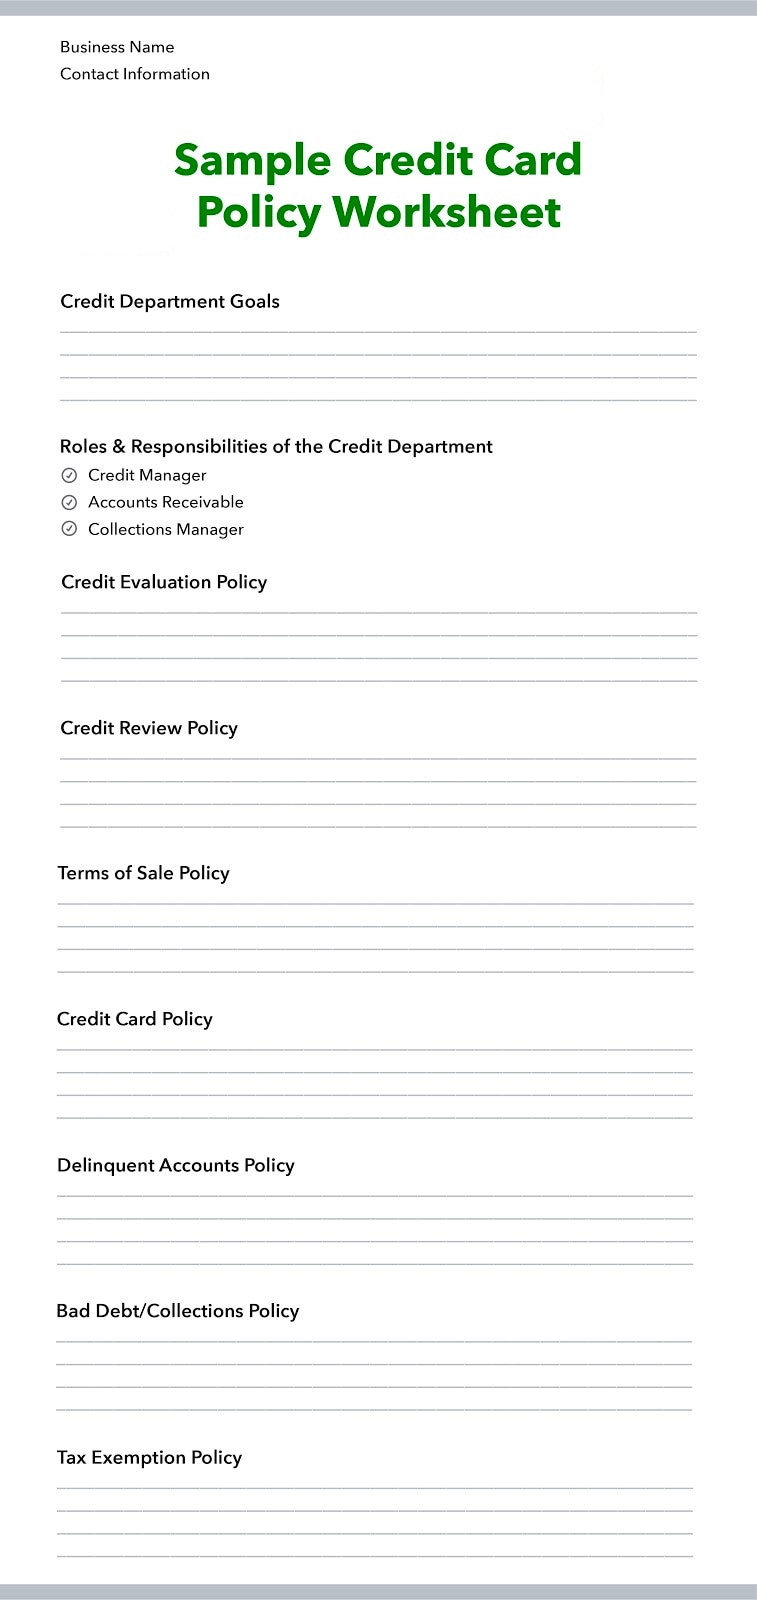 Sample credit card policy worksheet